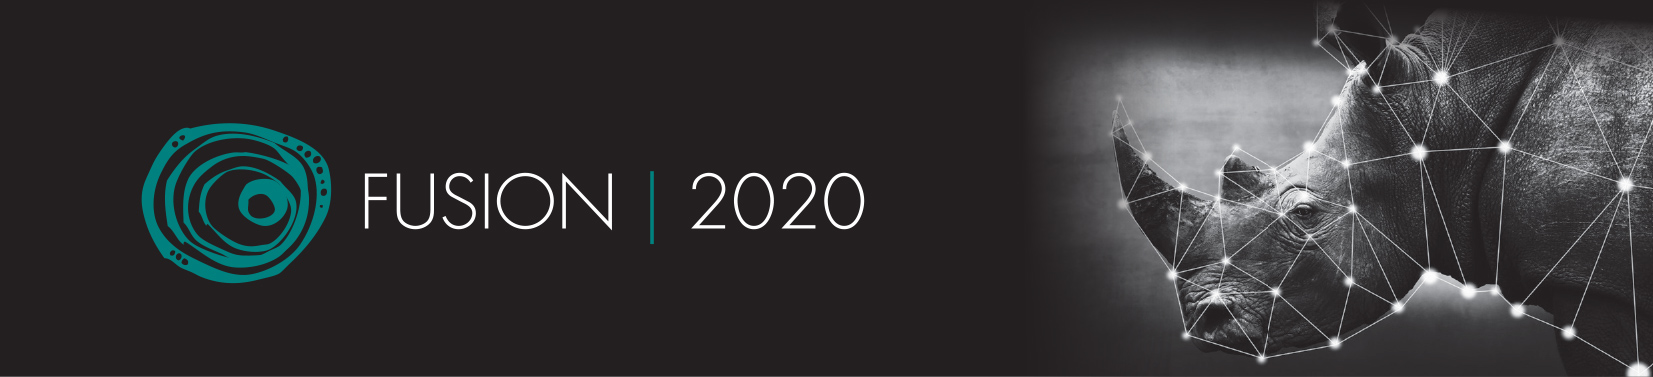 Fusion 2020 logo Web-banner